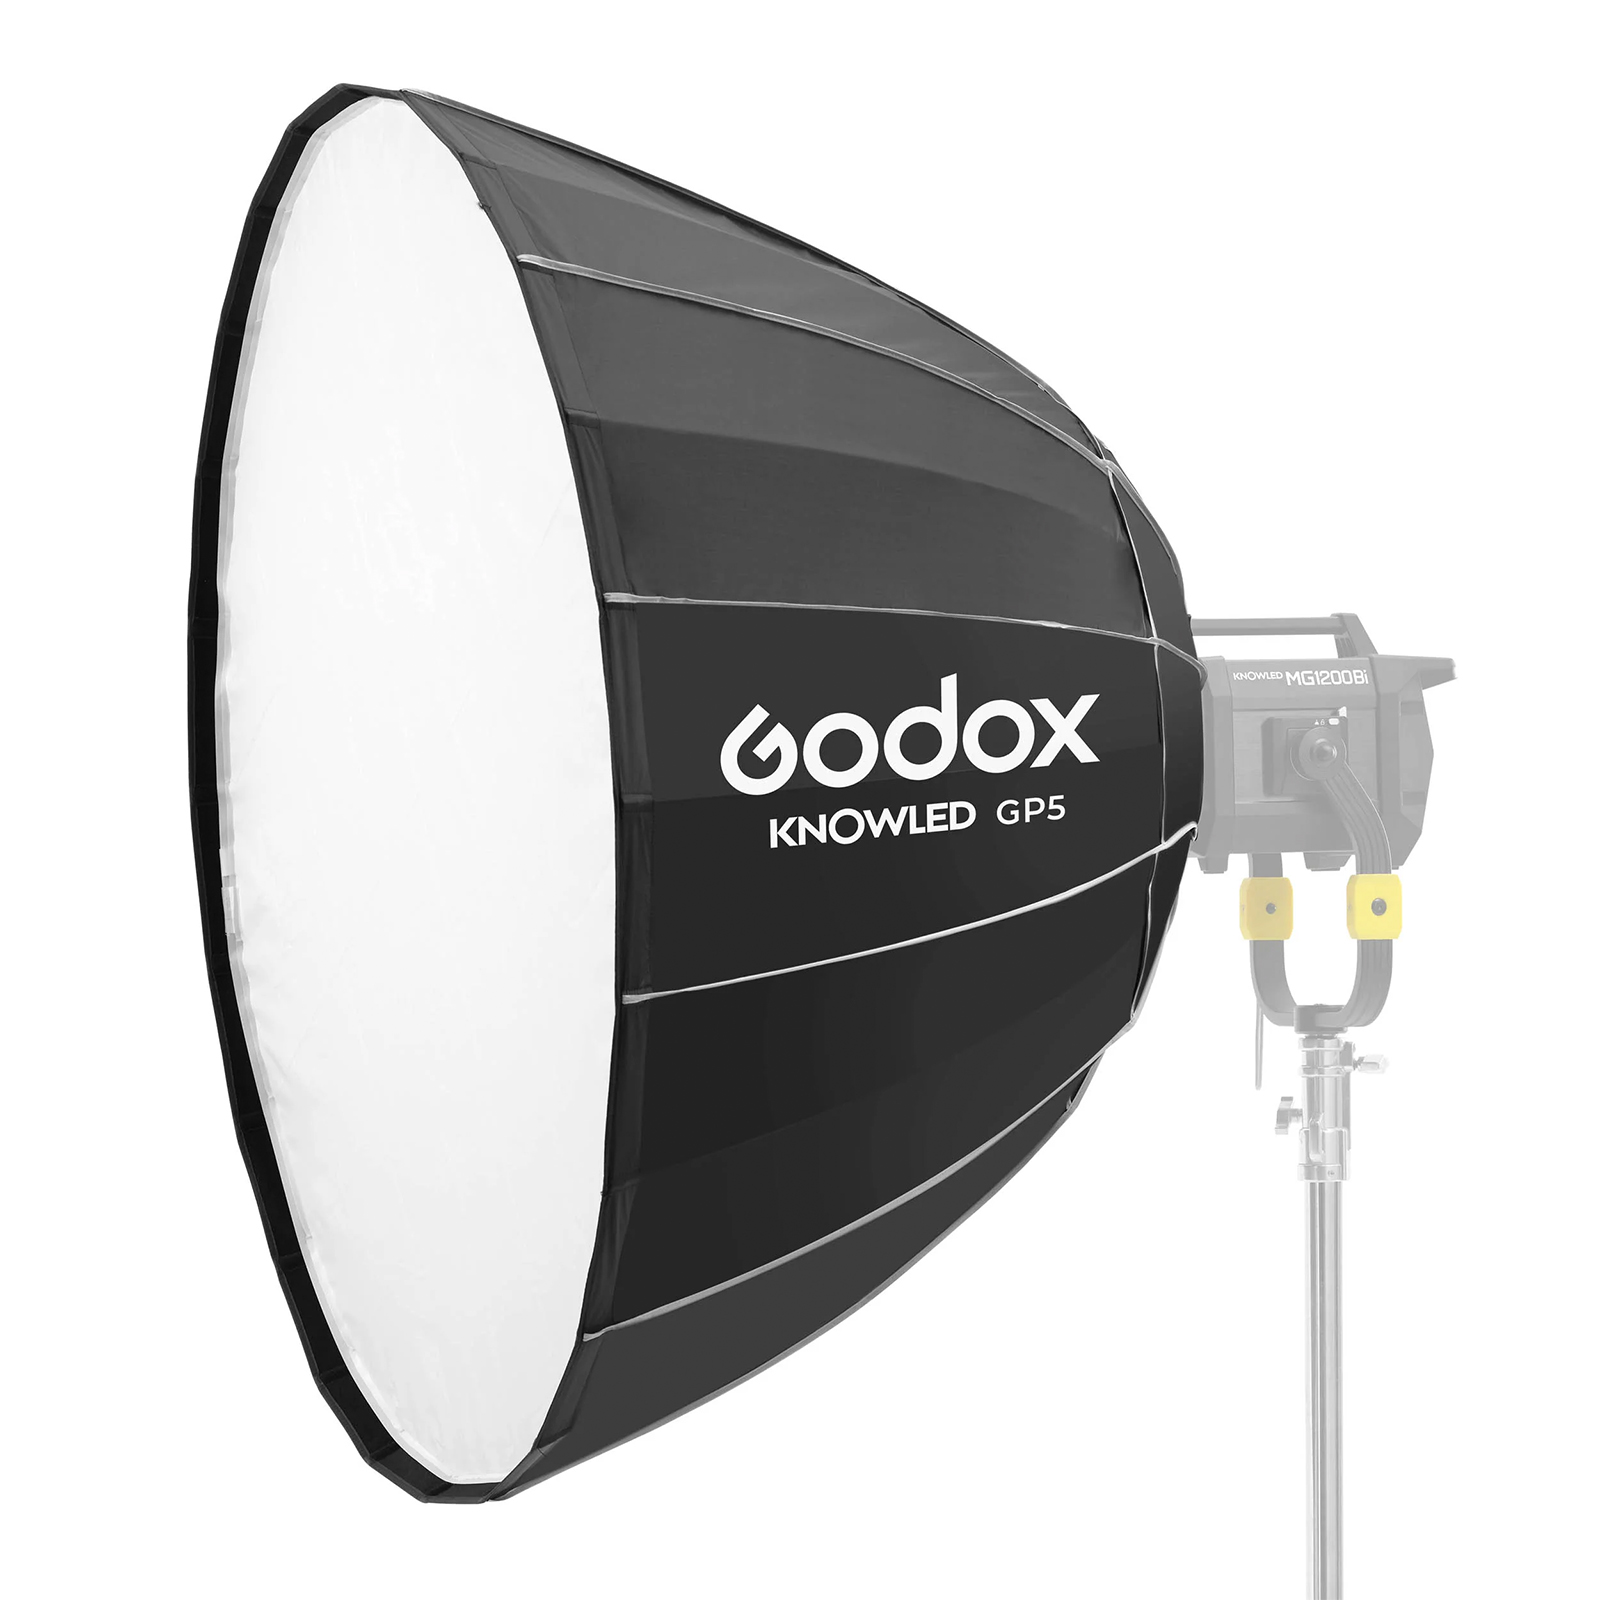 Image of Godox GP5 Parabolic Softbox 150 For MG1200BI